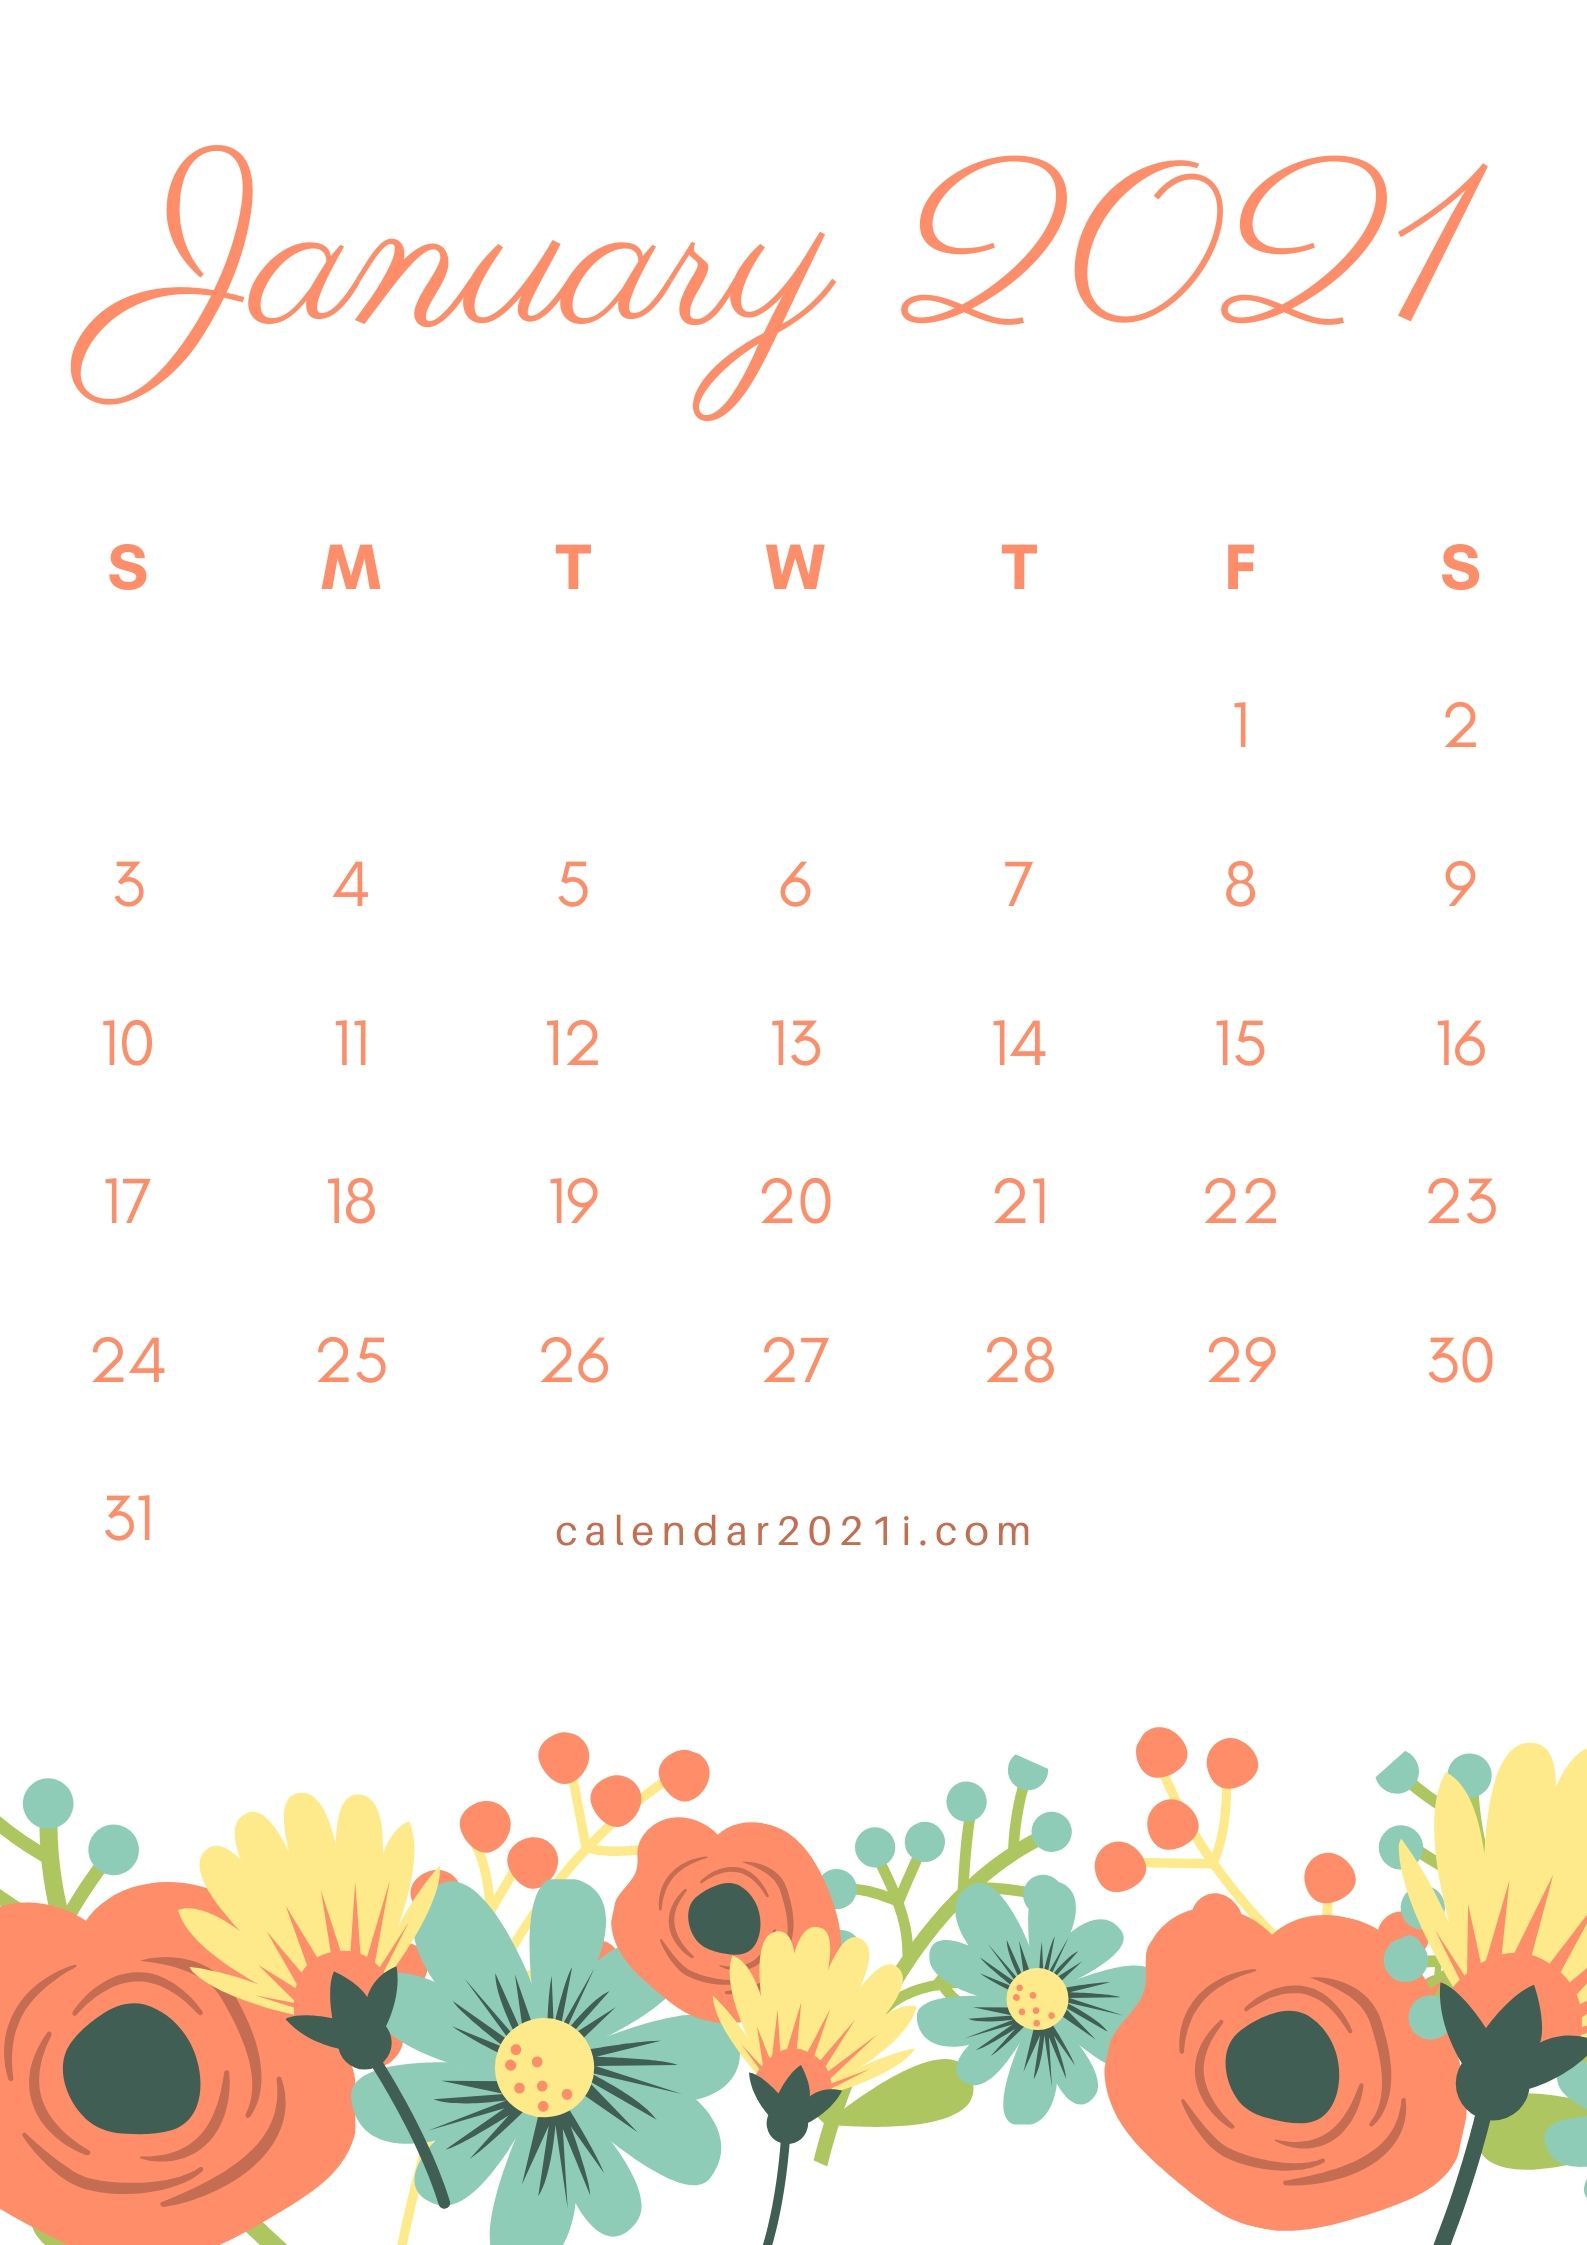 January 2021 Calendar Wallpaper Hd Image ID 6